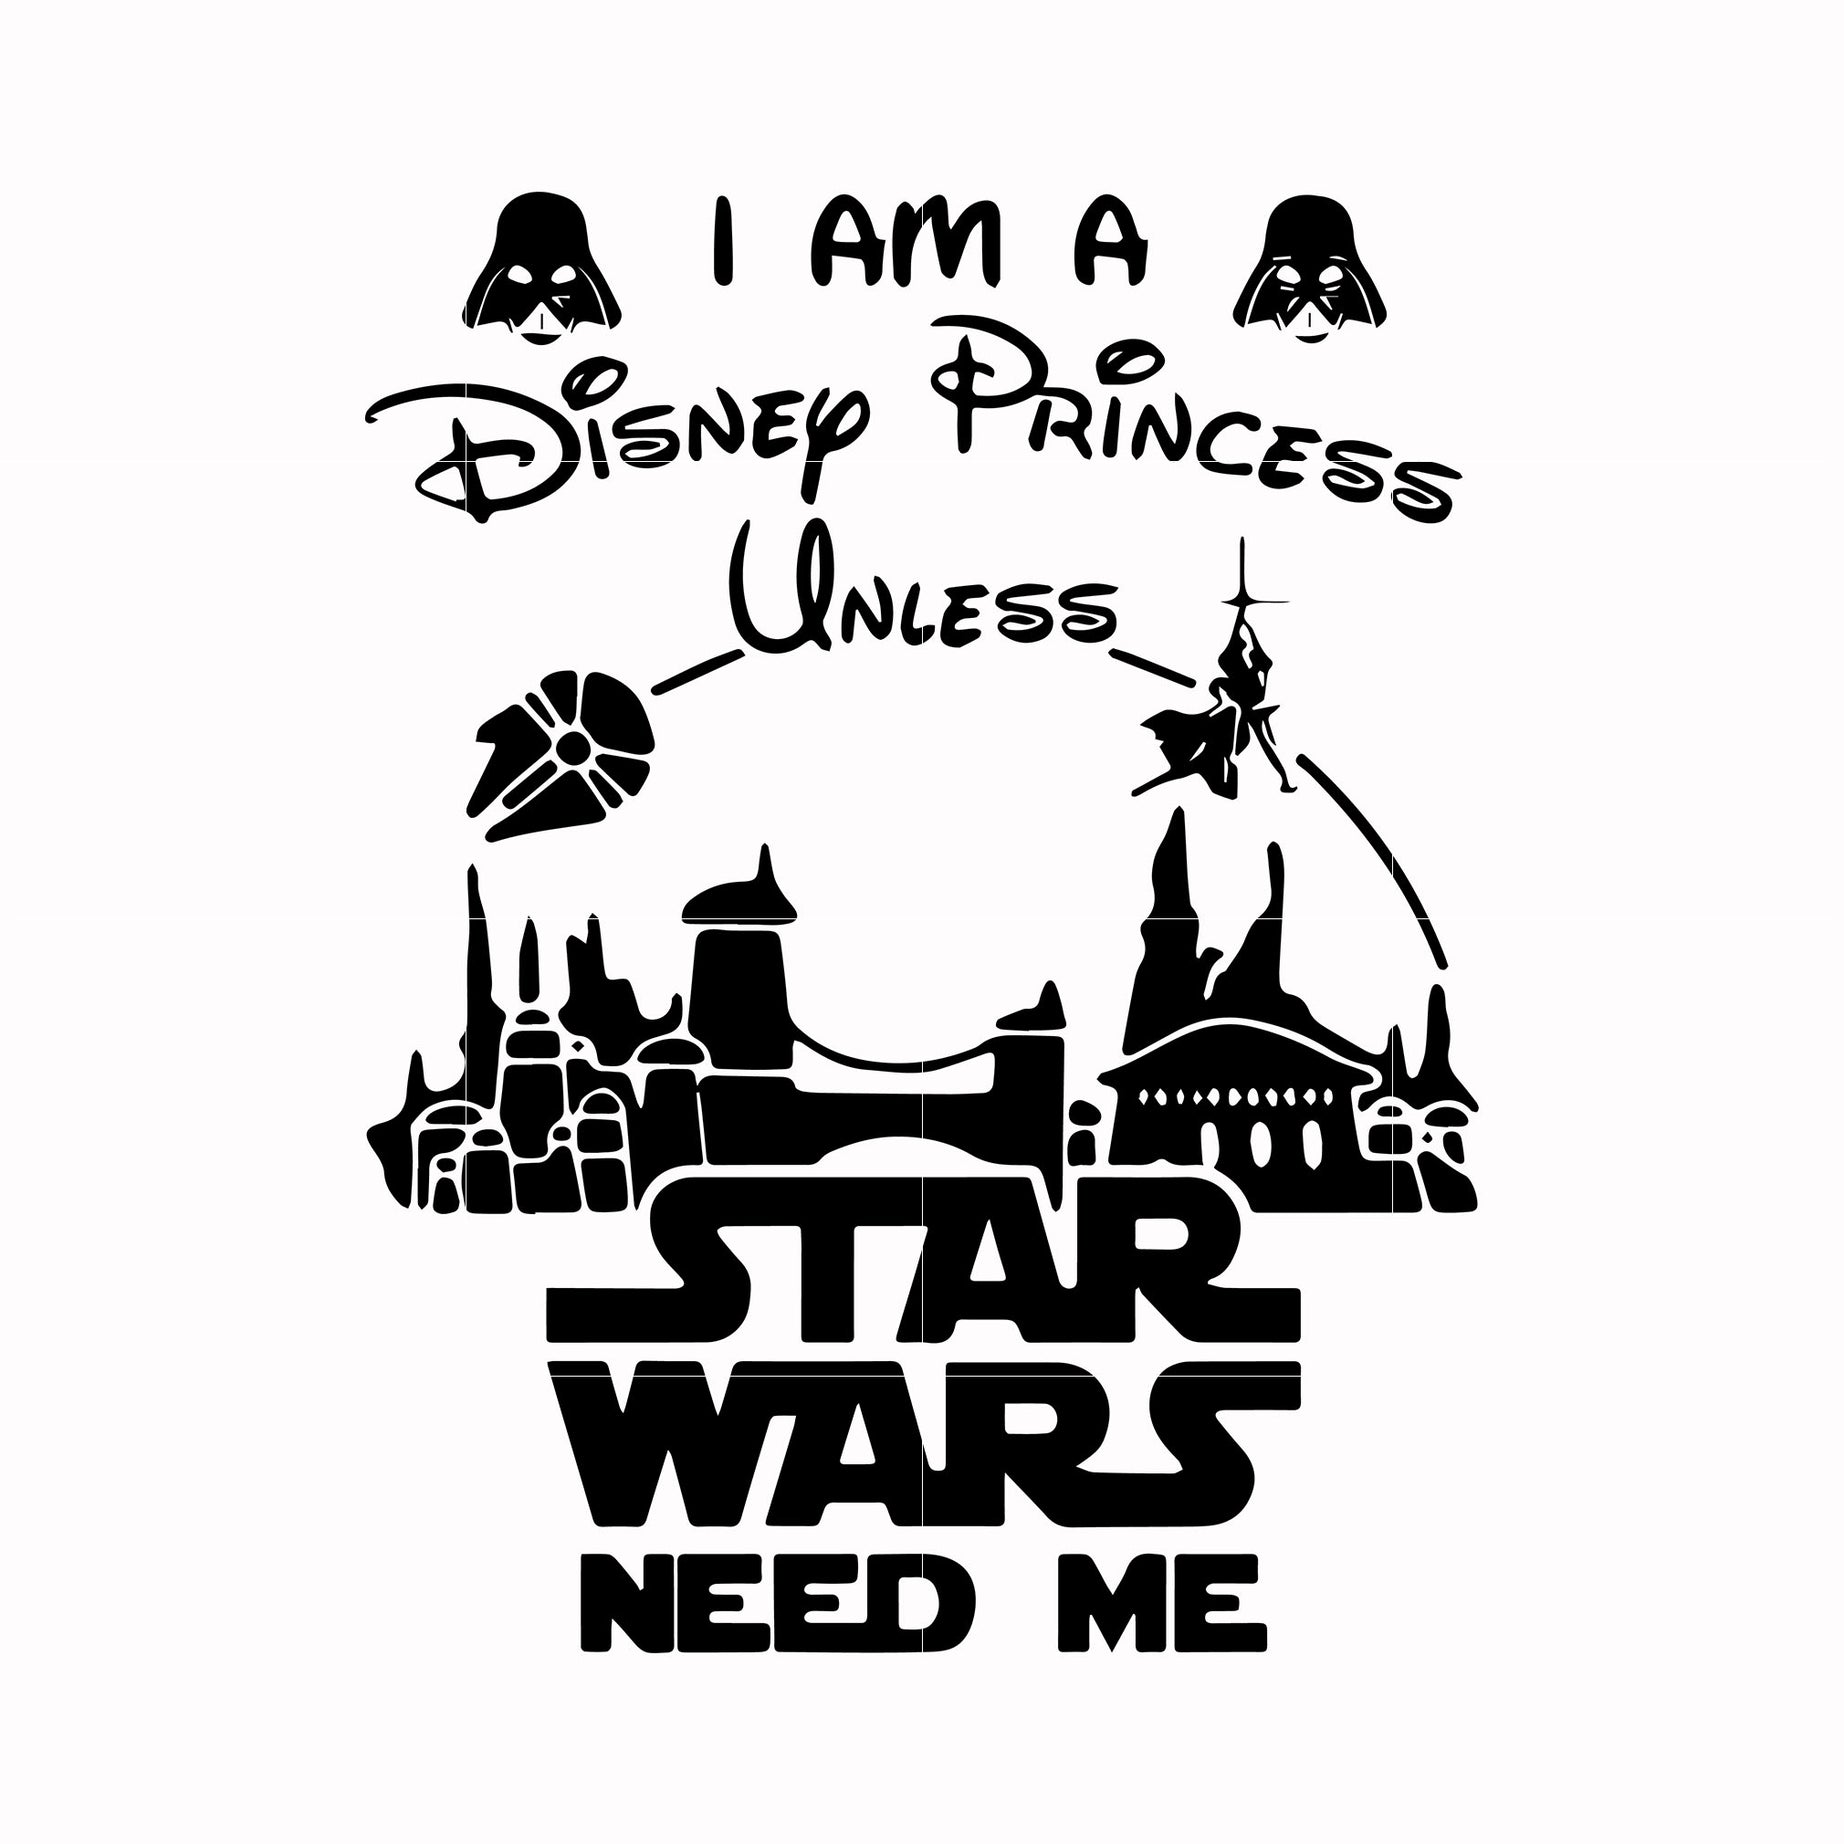 I am a Disney princess unless star war need me svg, png, dxf, eps digital file NCRM0030